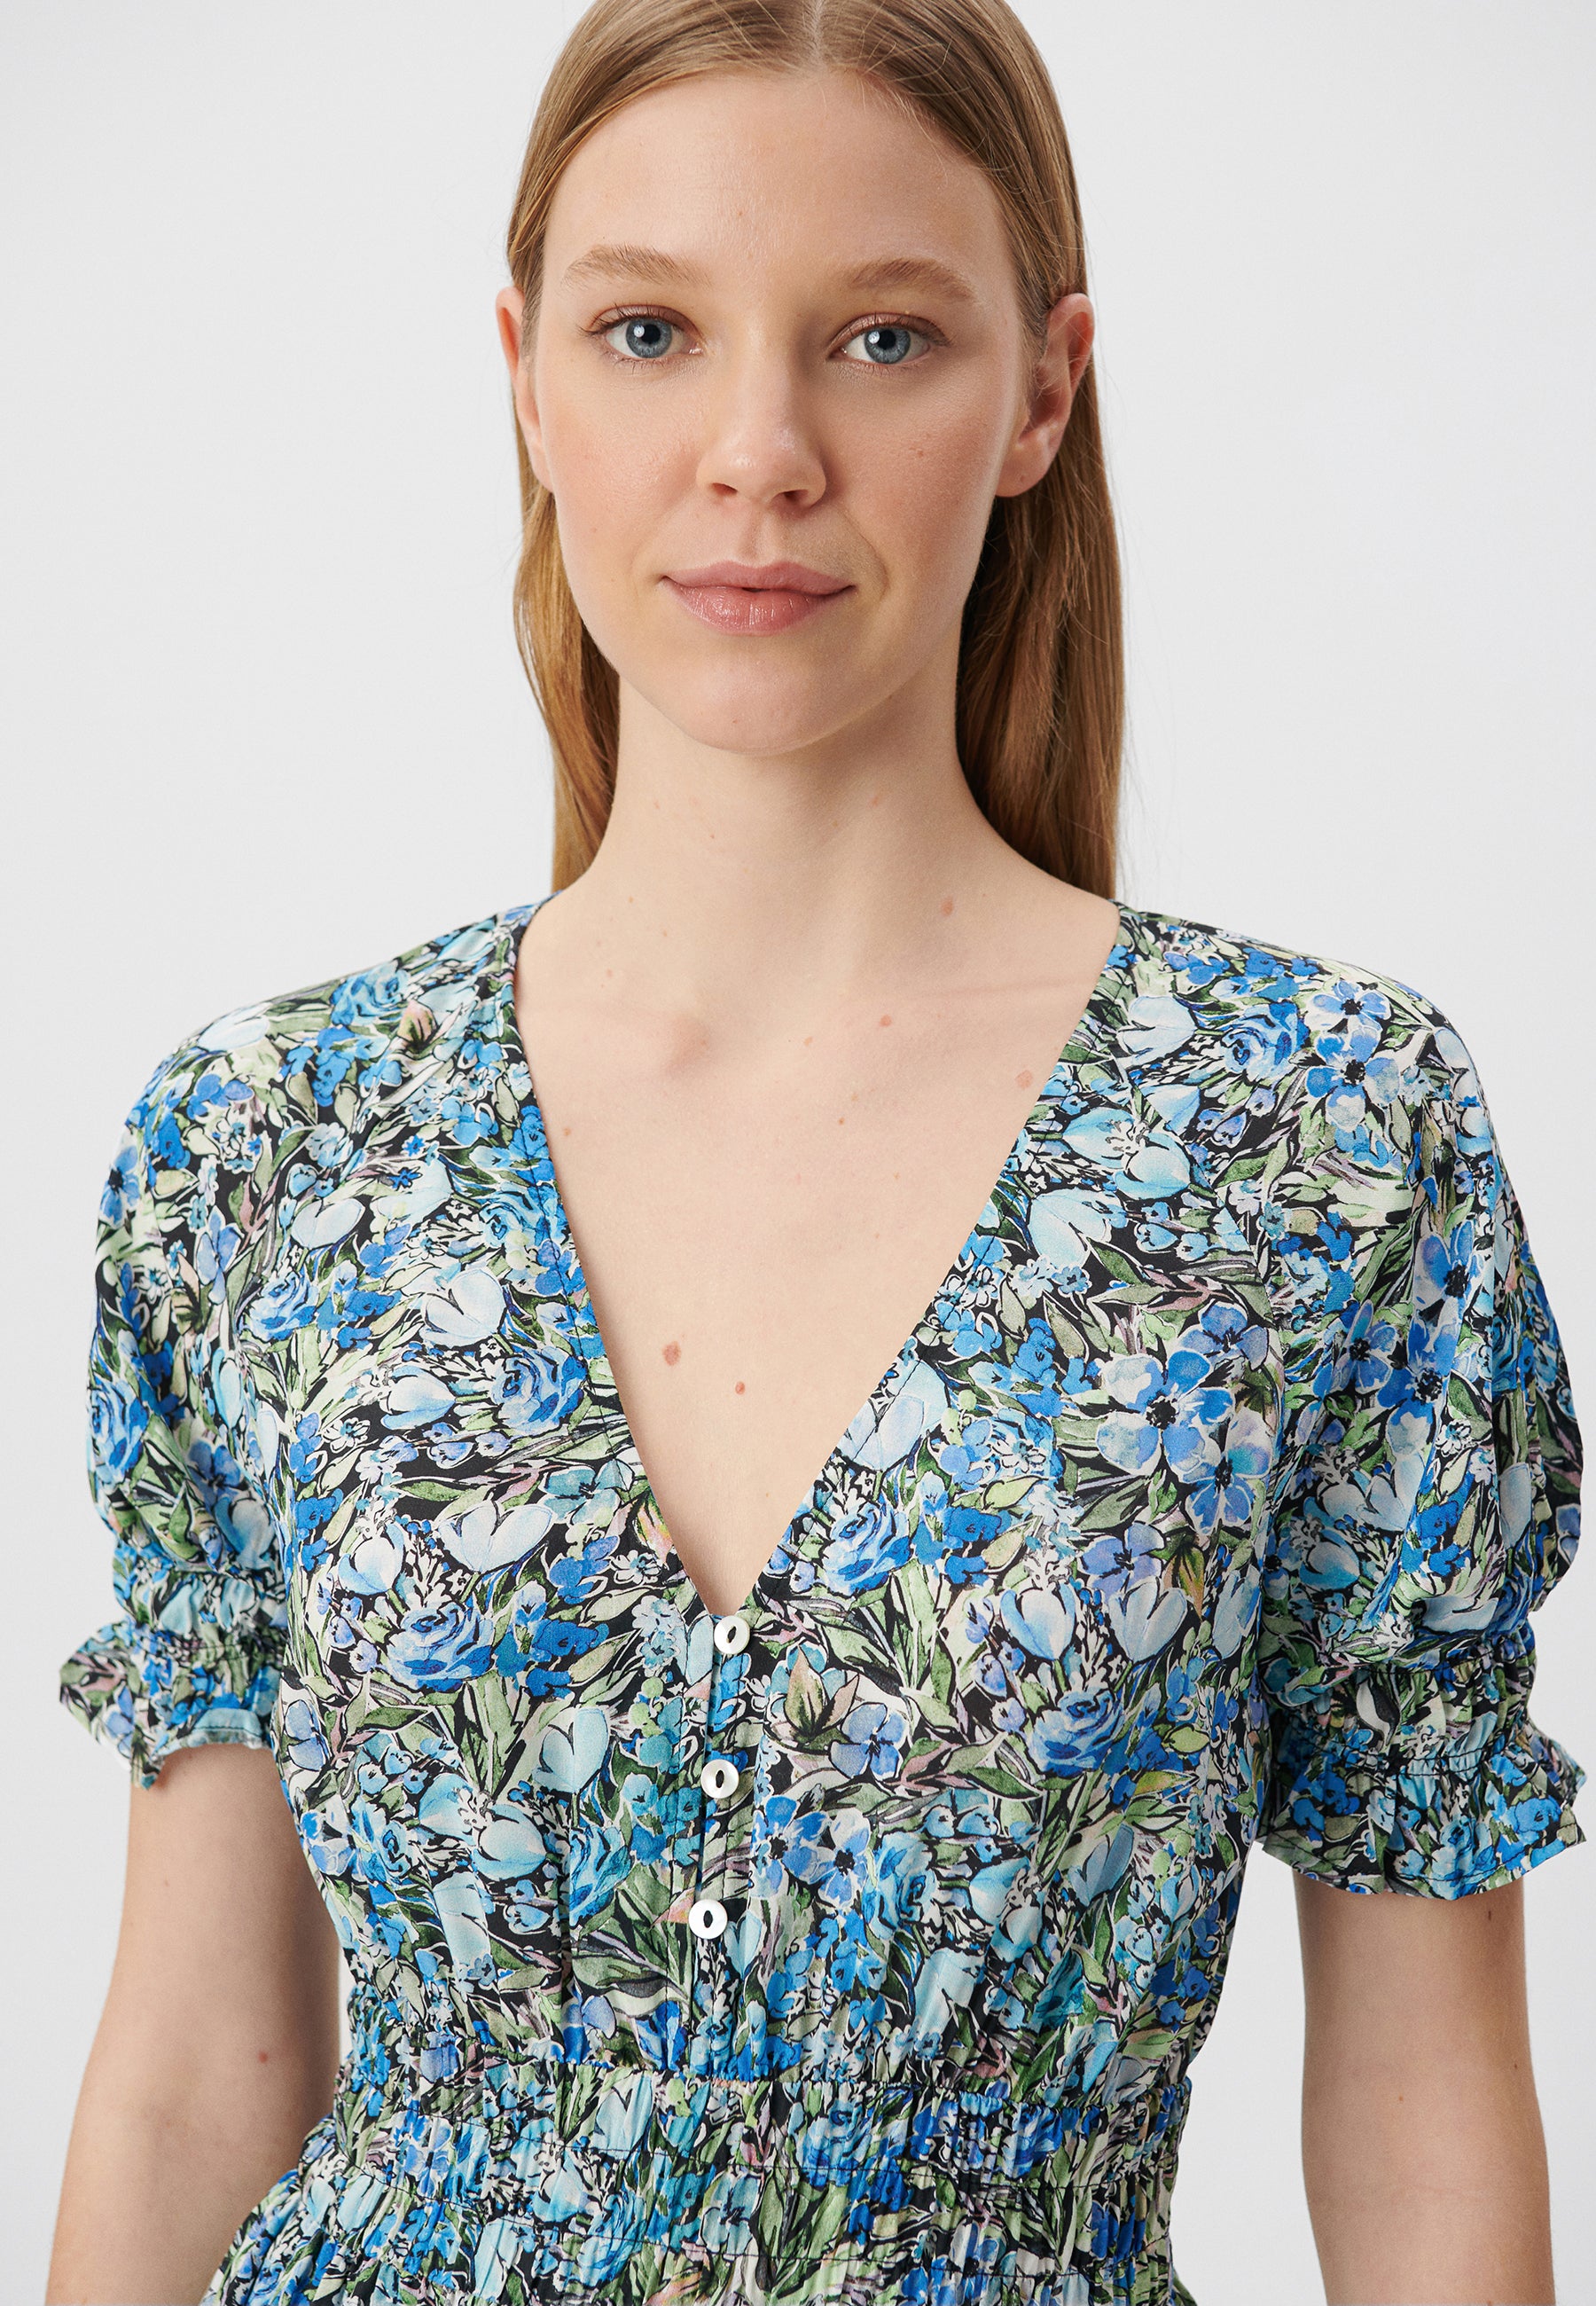 Short Sleeve Woven Dress in Blue Garden Print Kleider Mavi   